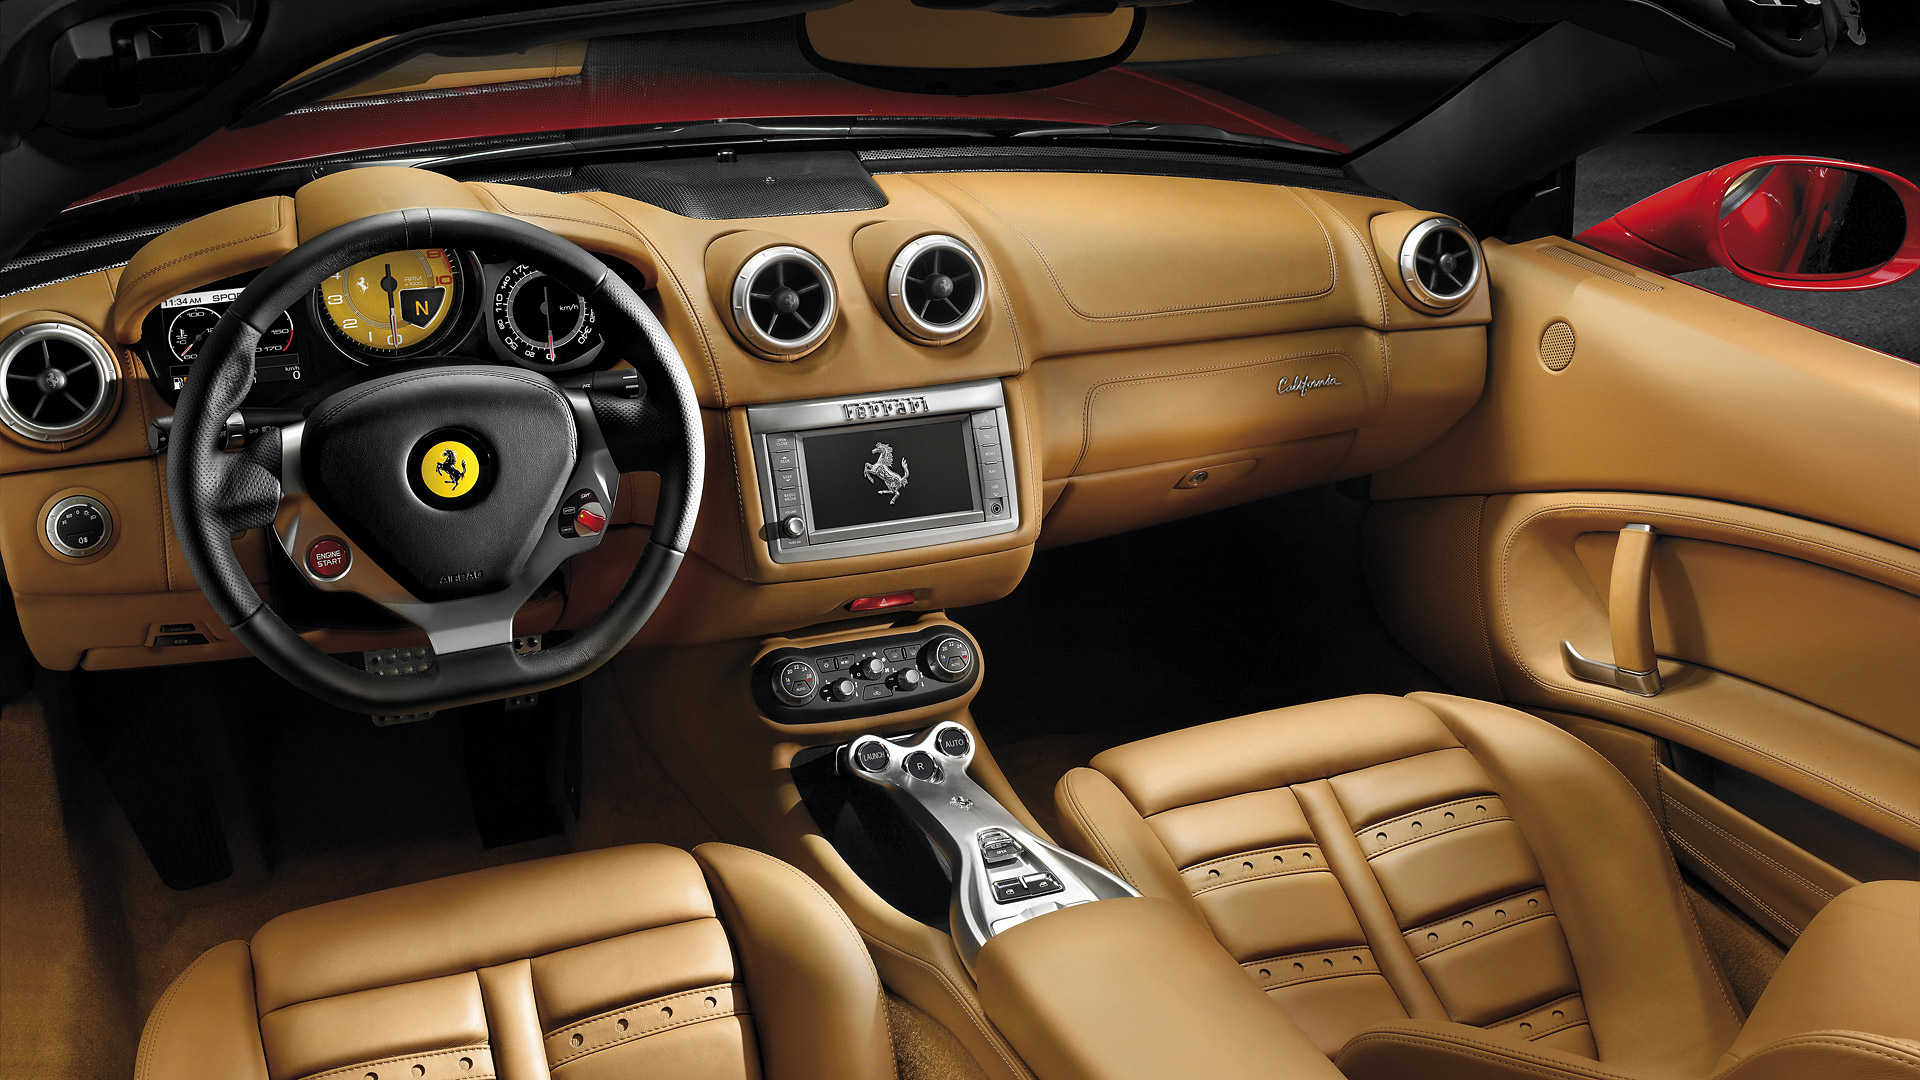  2009 Ferrari California Wallpaper.